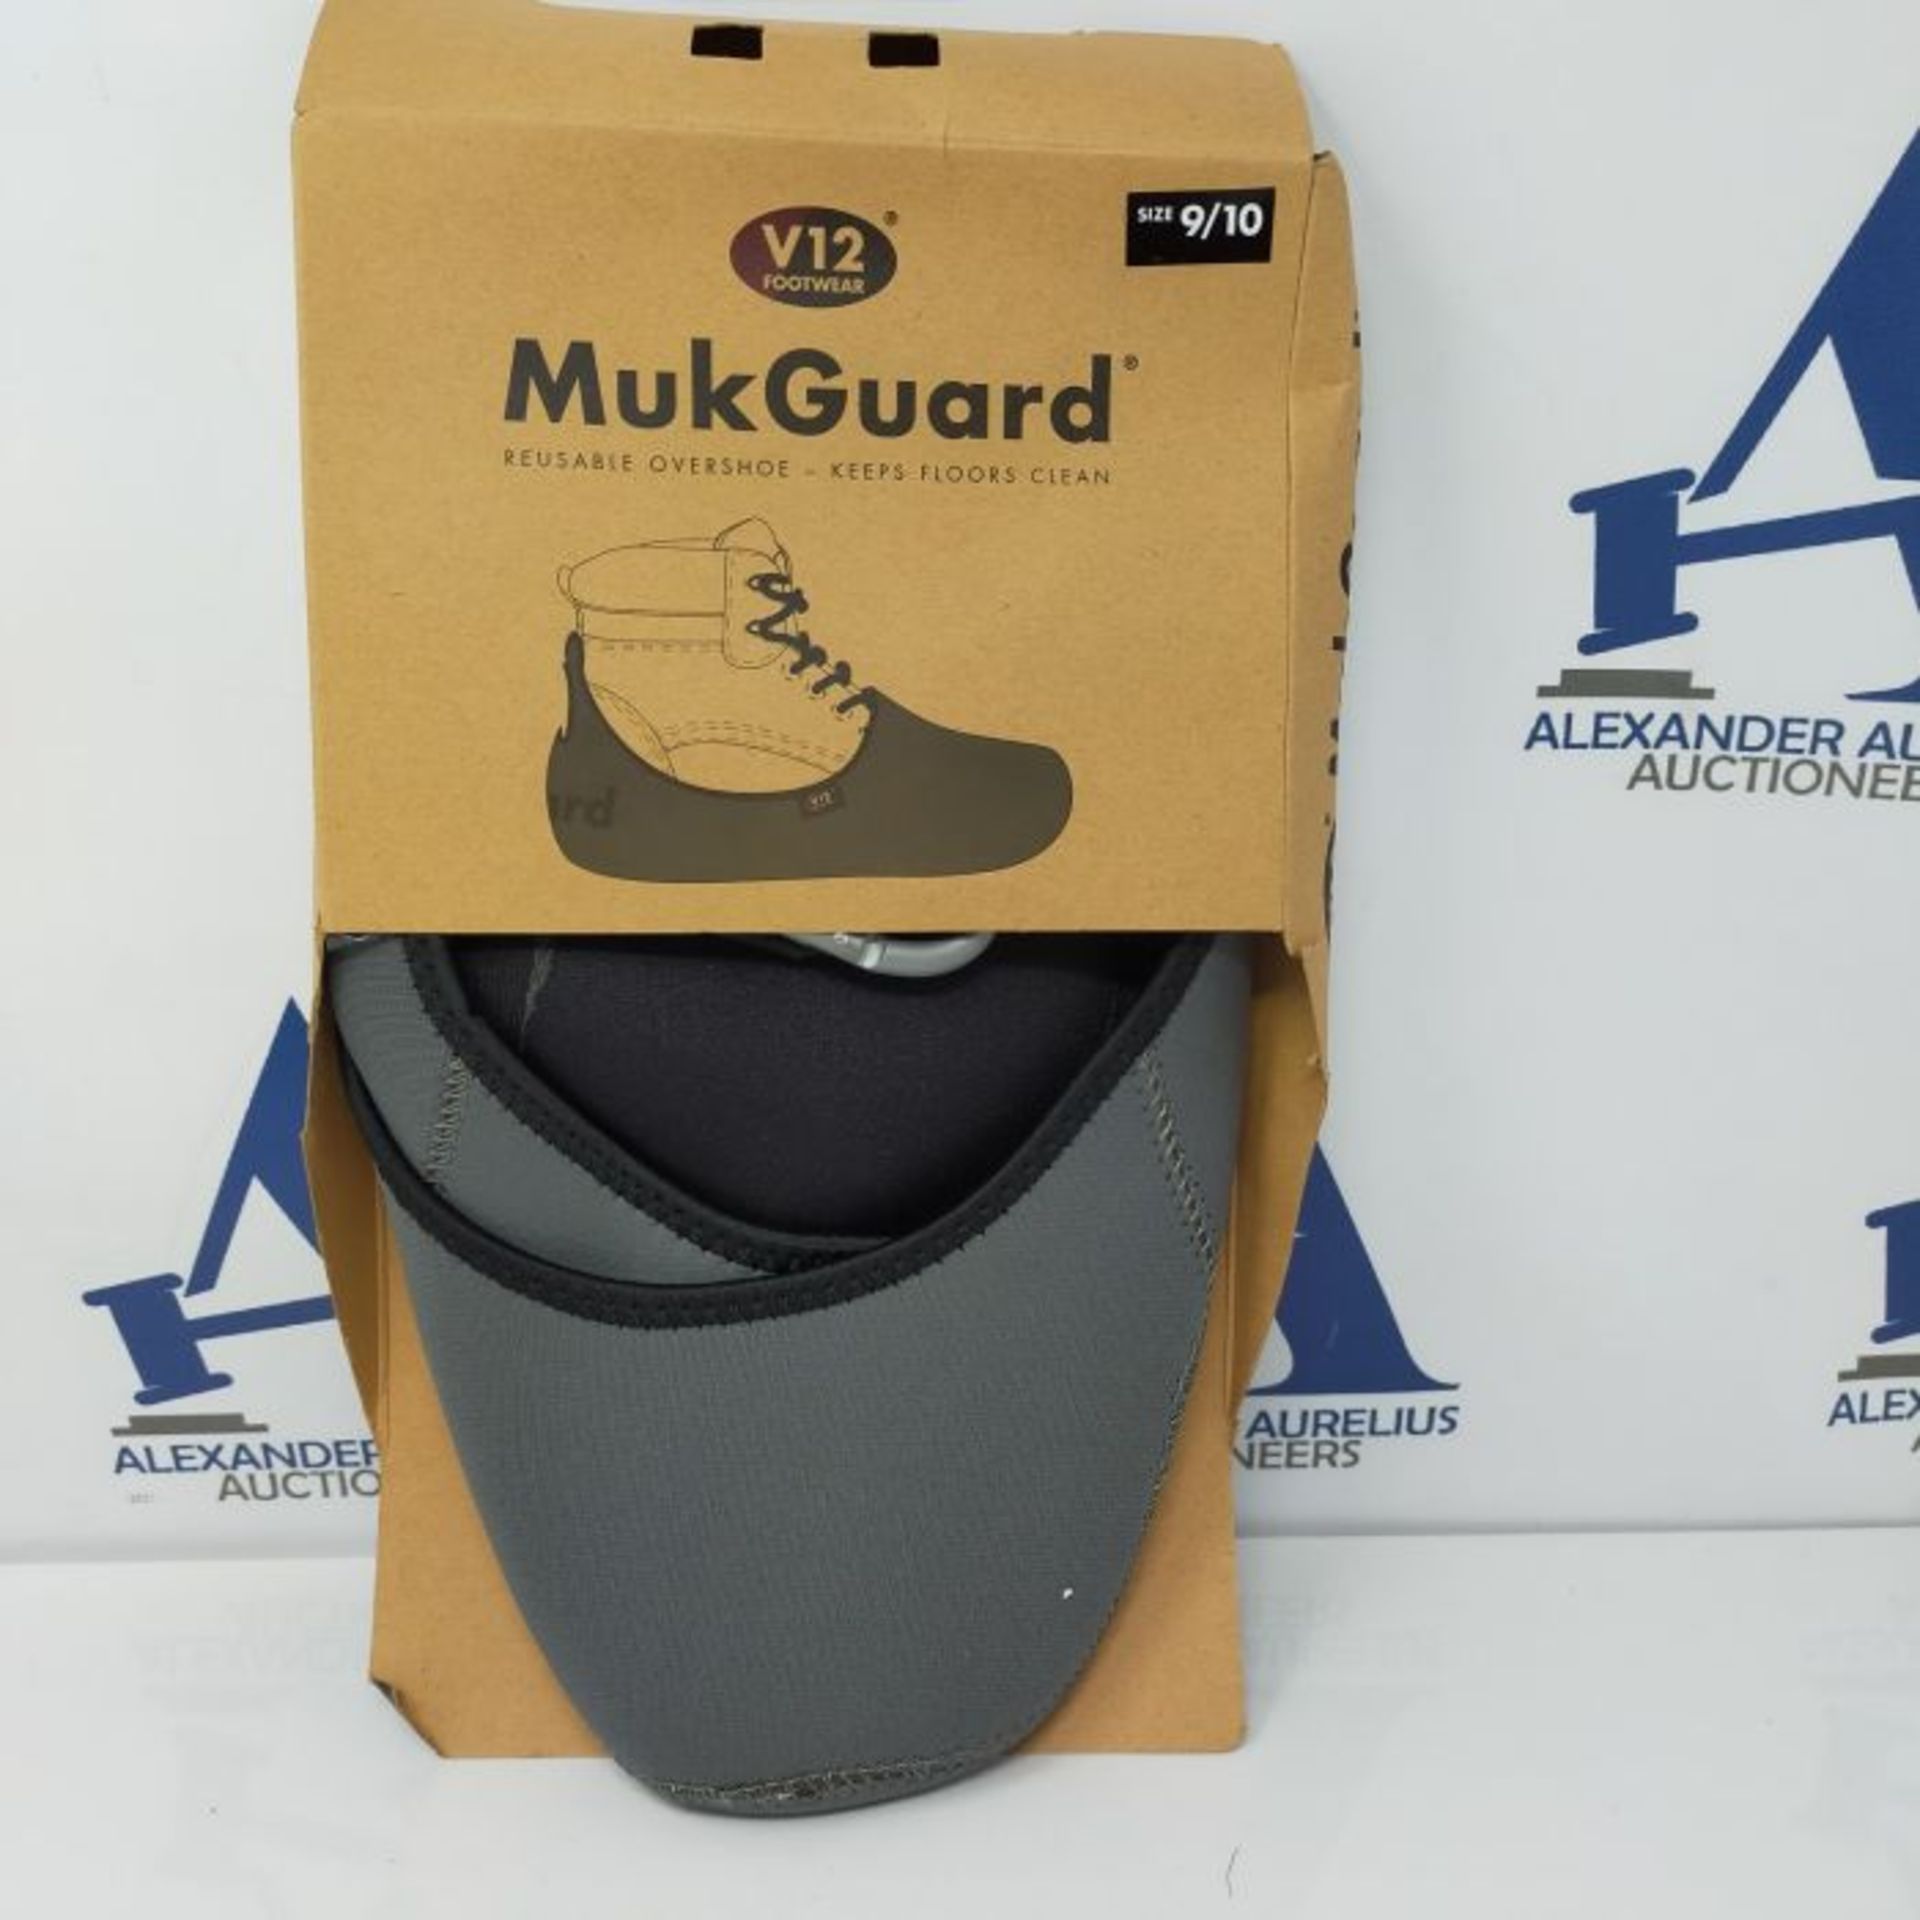 V12 MukGuard, Reusable Slip Resistant Neoprene Overshoe, L (09/10), Grey - Image 2 of 2